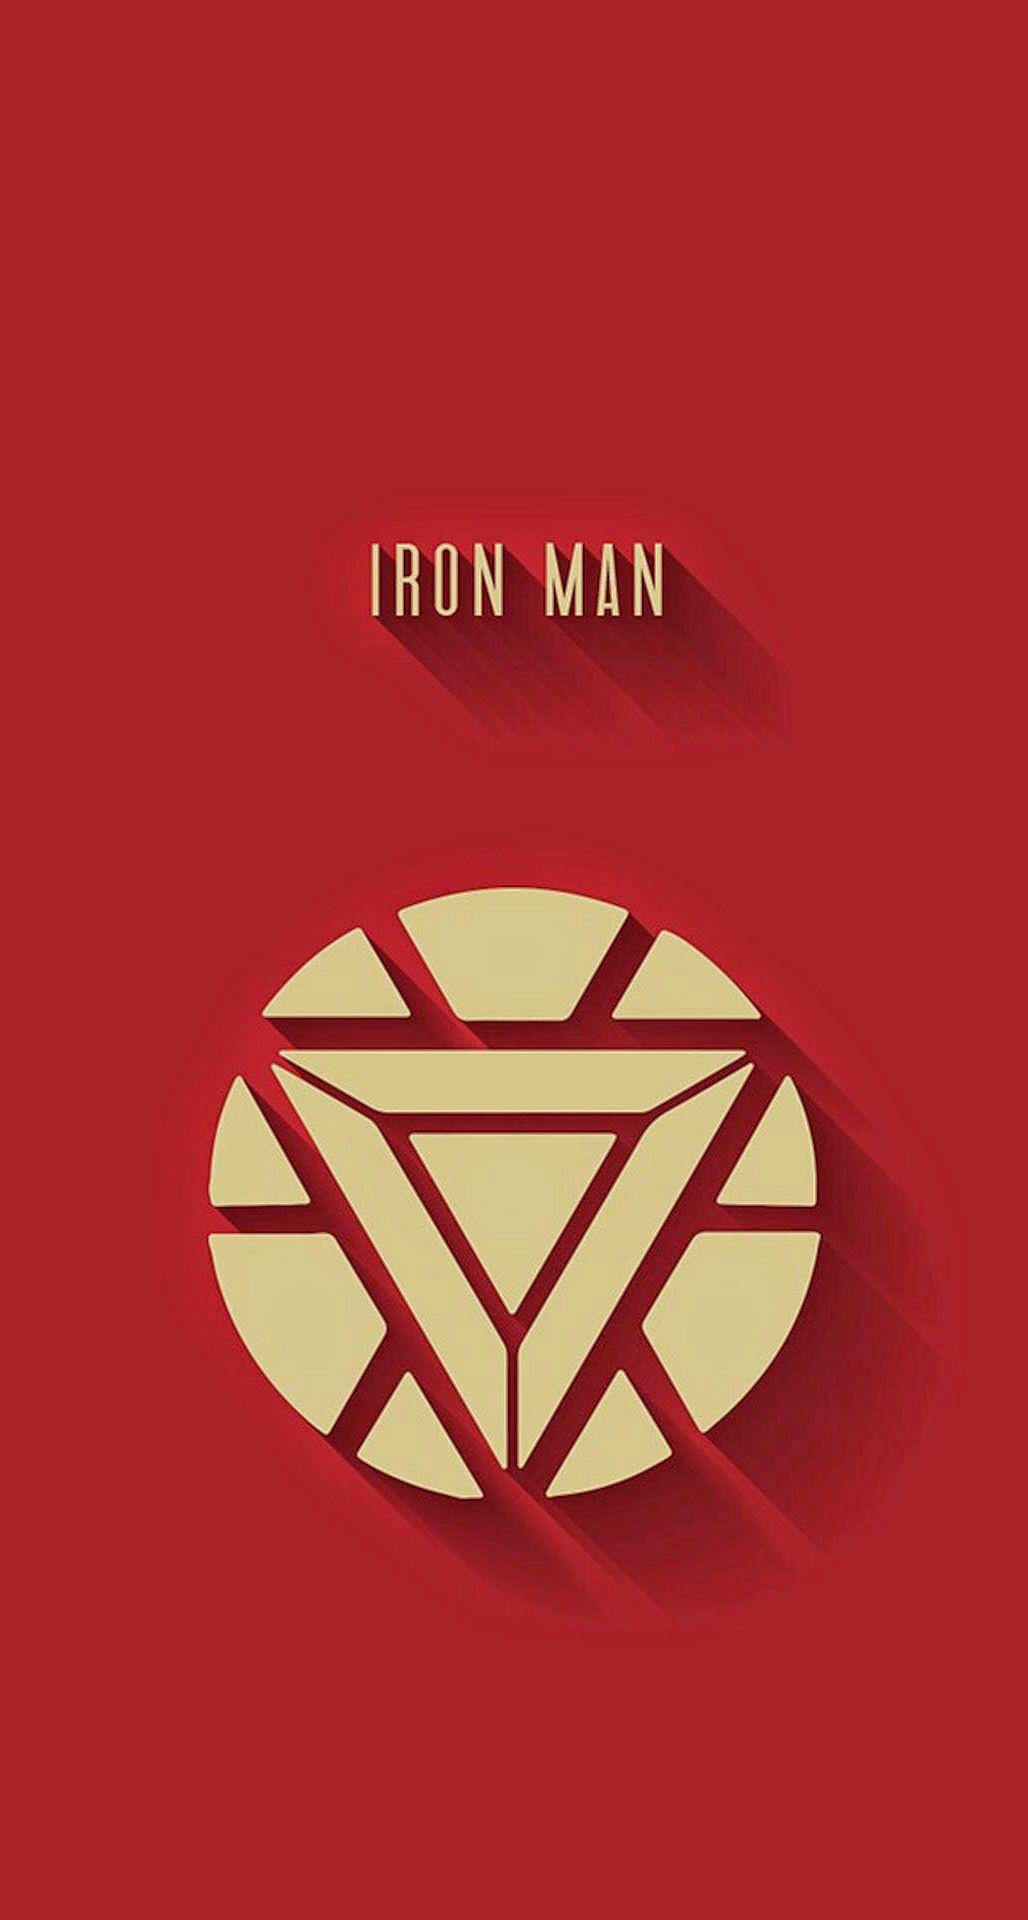 Iron Man Logo - Ironman logo. Illustrations. Iron Man, Marvel, Iron man wallpaper